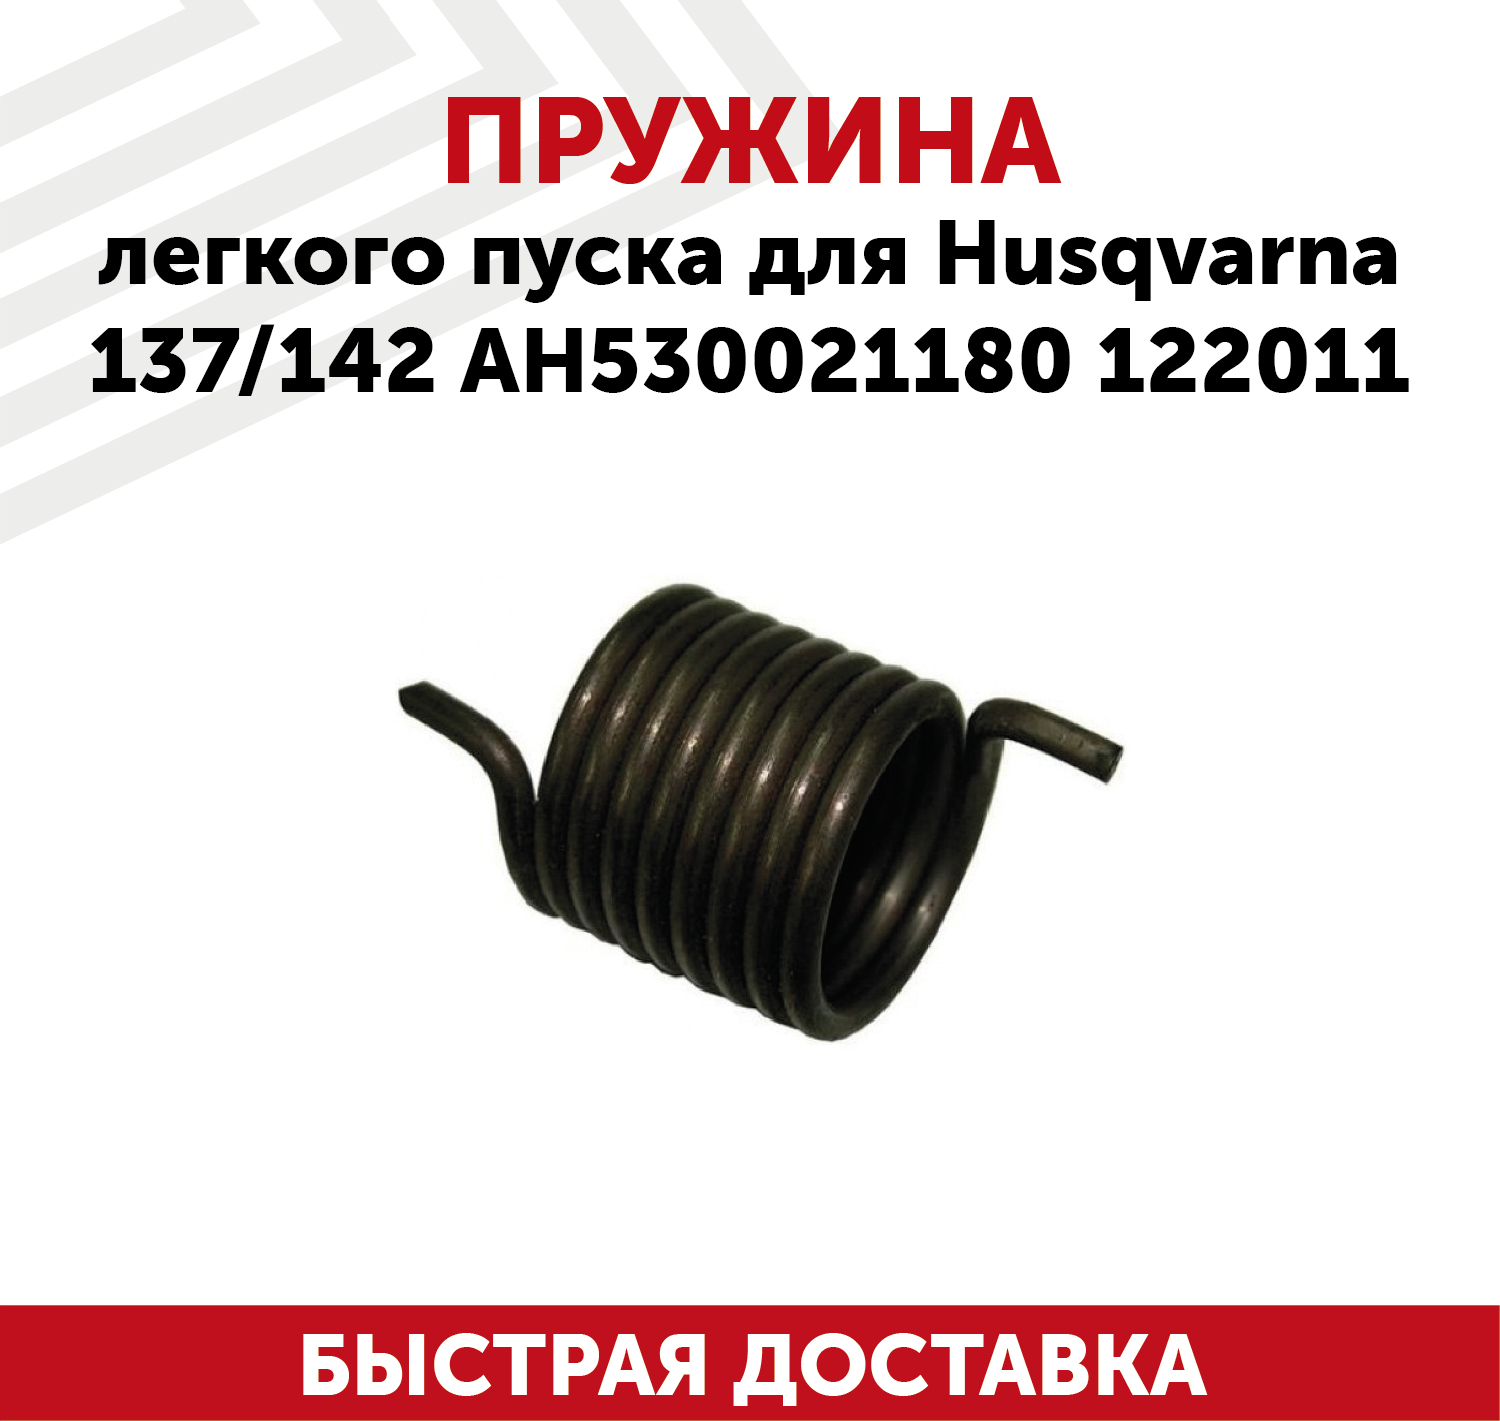 Пружина шкива cтартера (легкого пуска) для бензопилы (цепной пилы) Husqvarna 137/142 АН530021180 122011